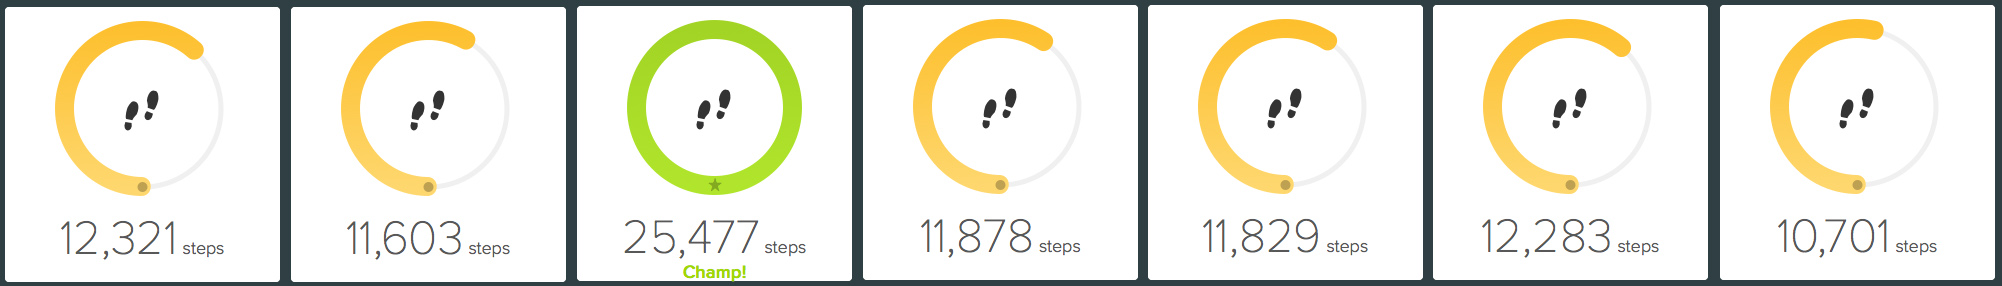 96,092 steps